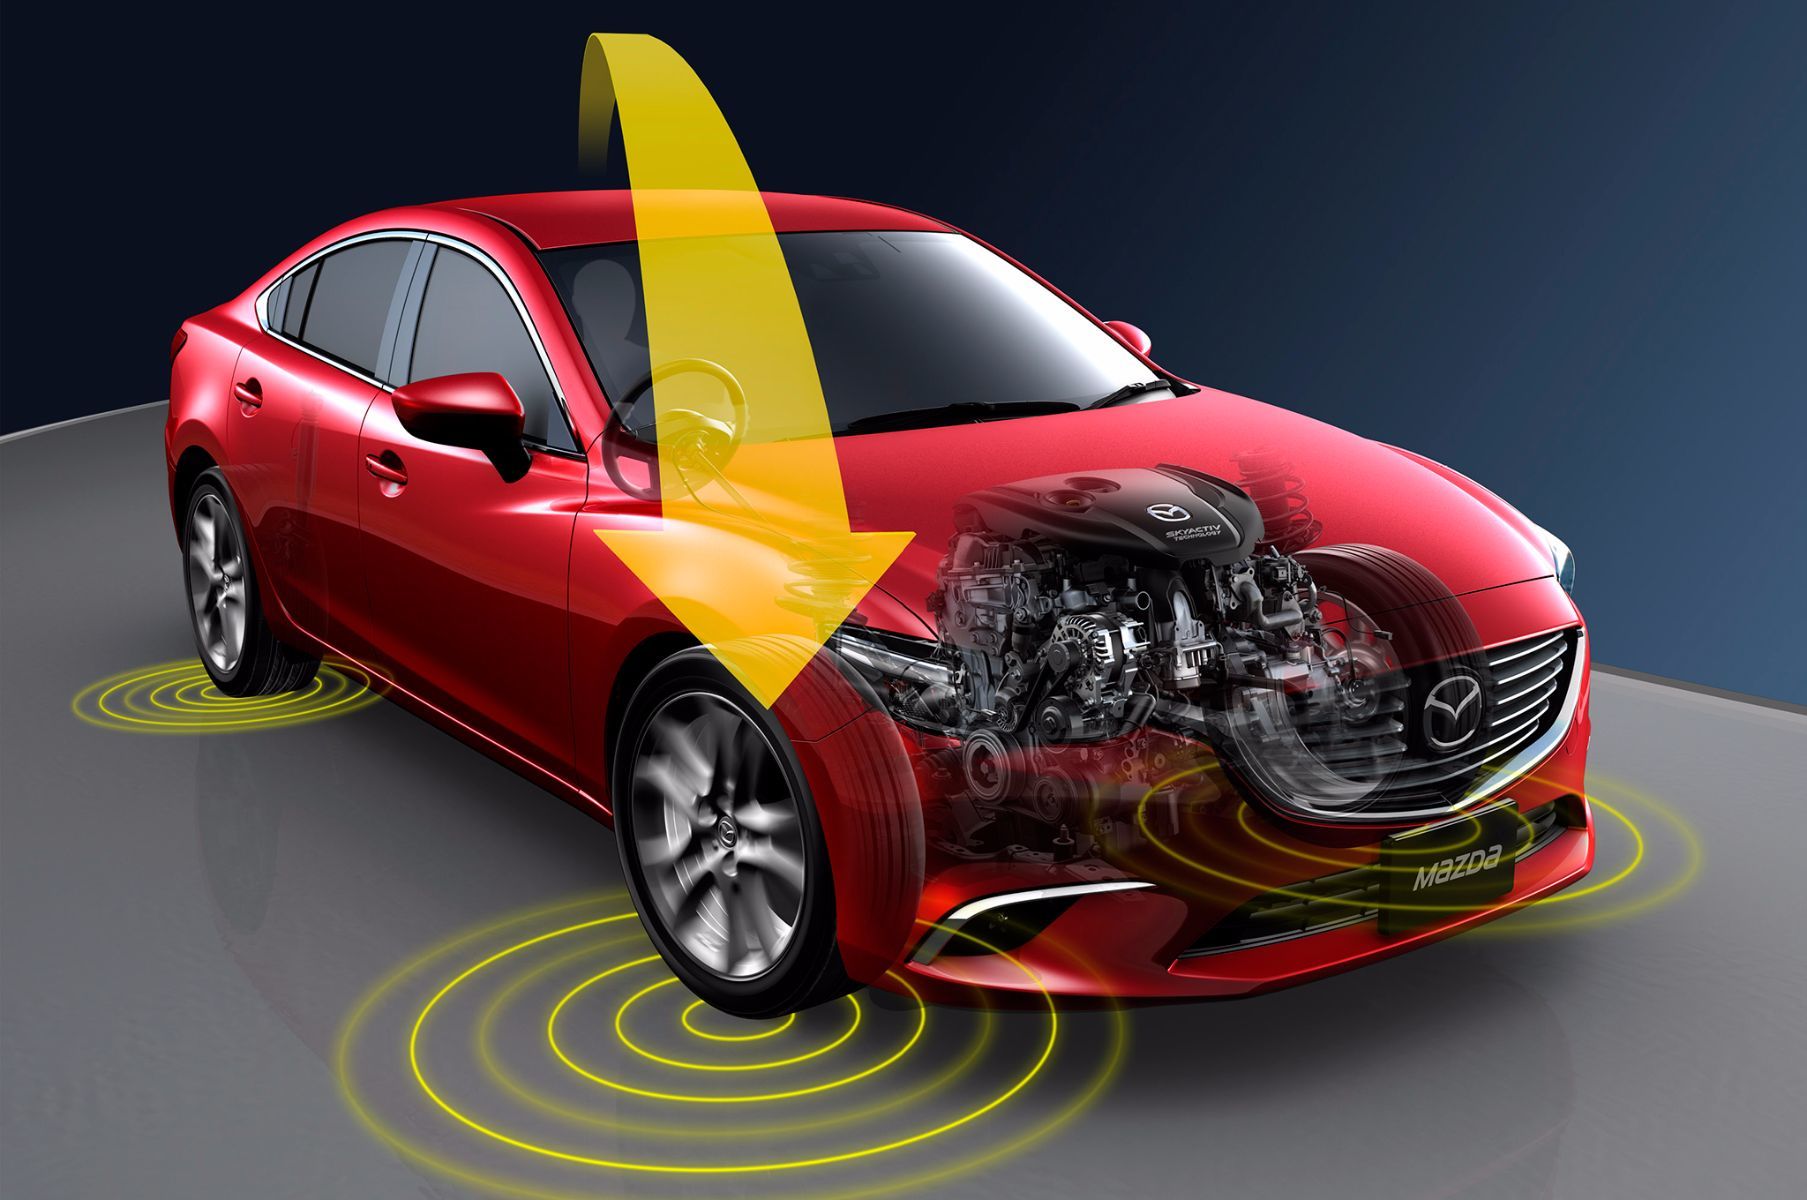 Mazda g vectoring control engine